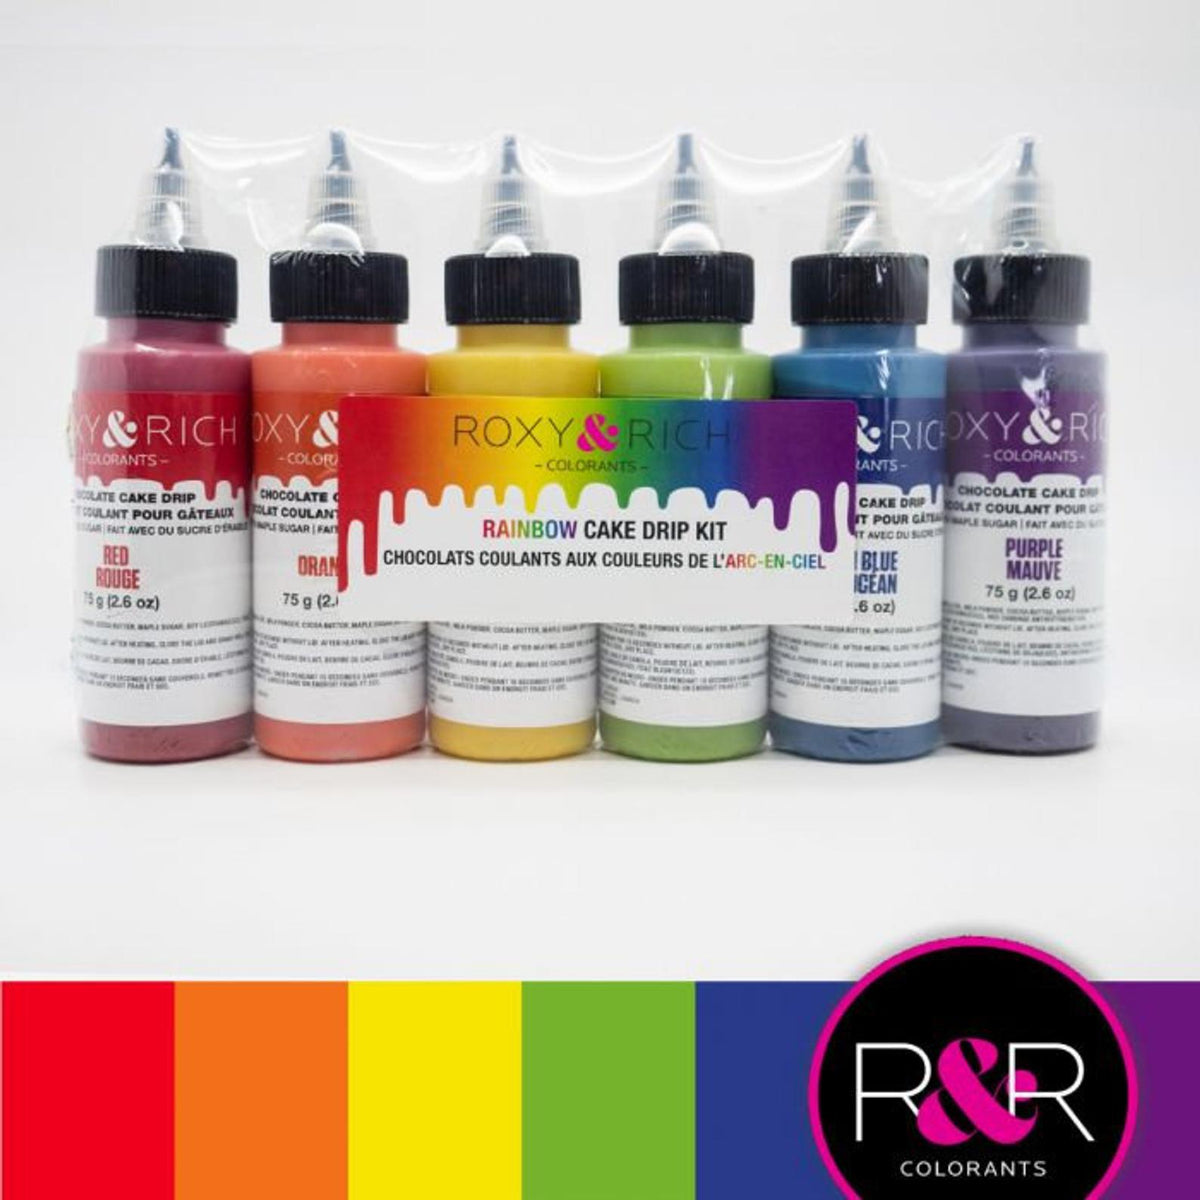 Craft Paint, Set of 6, Rainbow Colors